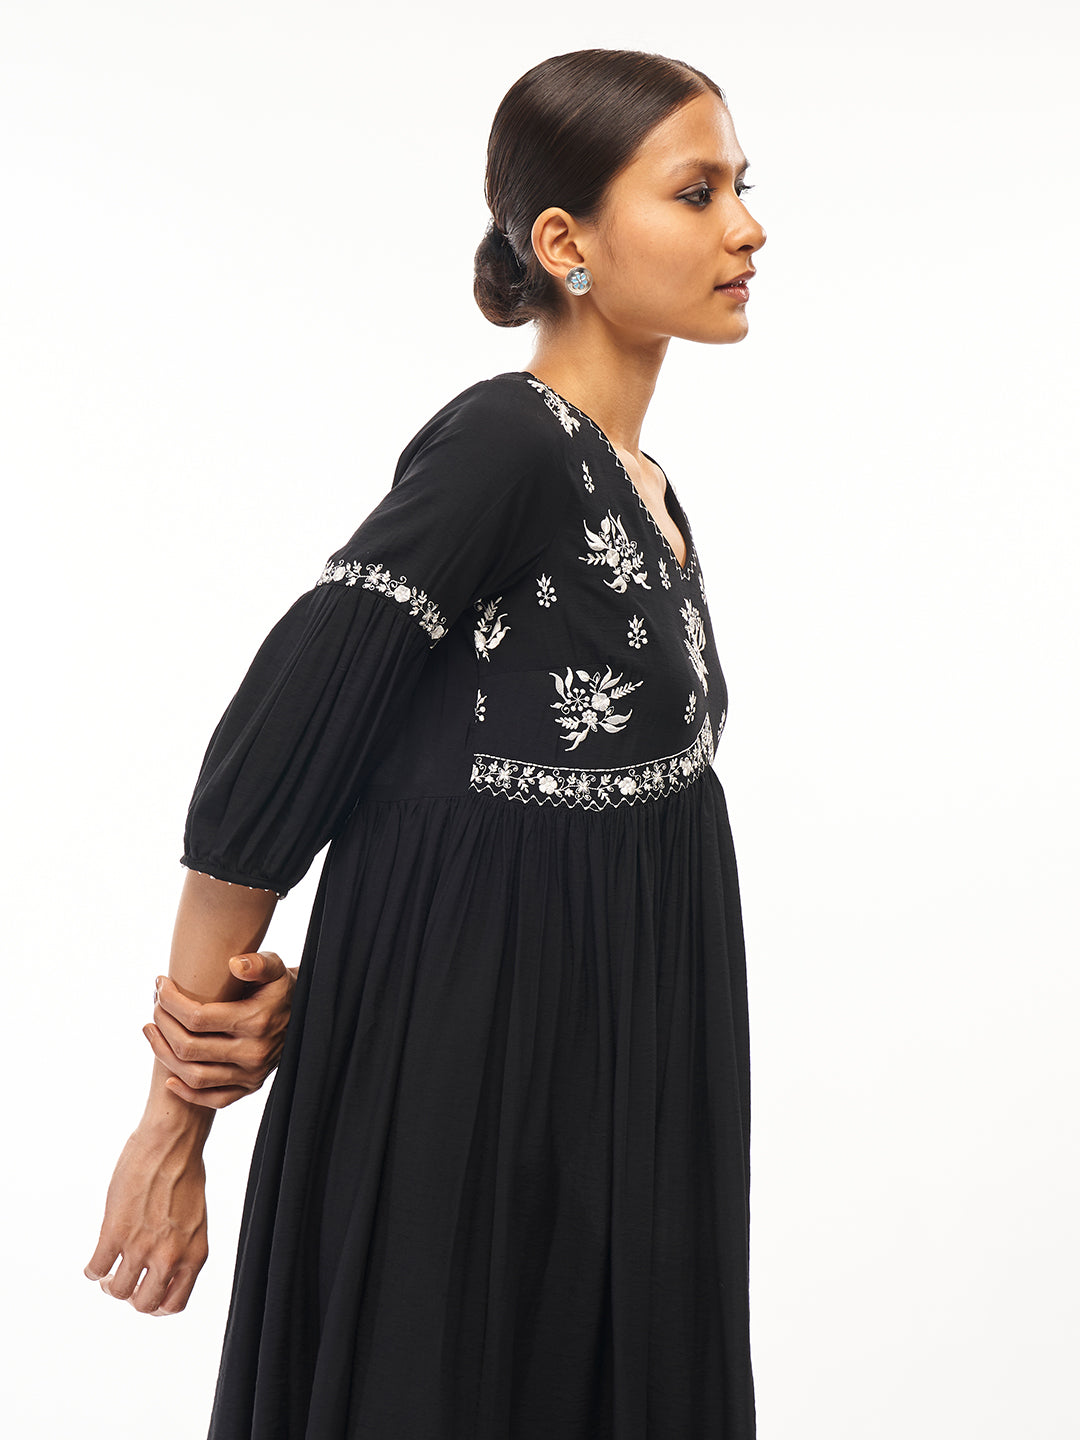 Ethnic Motifs Embroidered Dress - ARH546